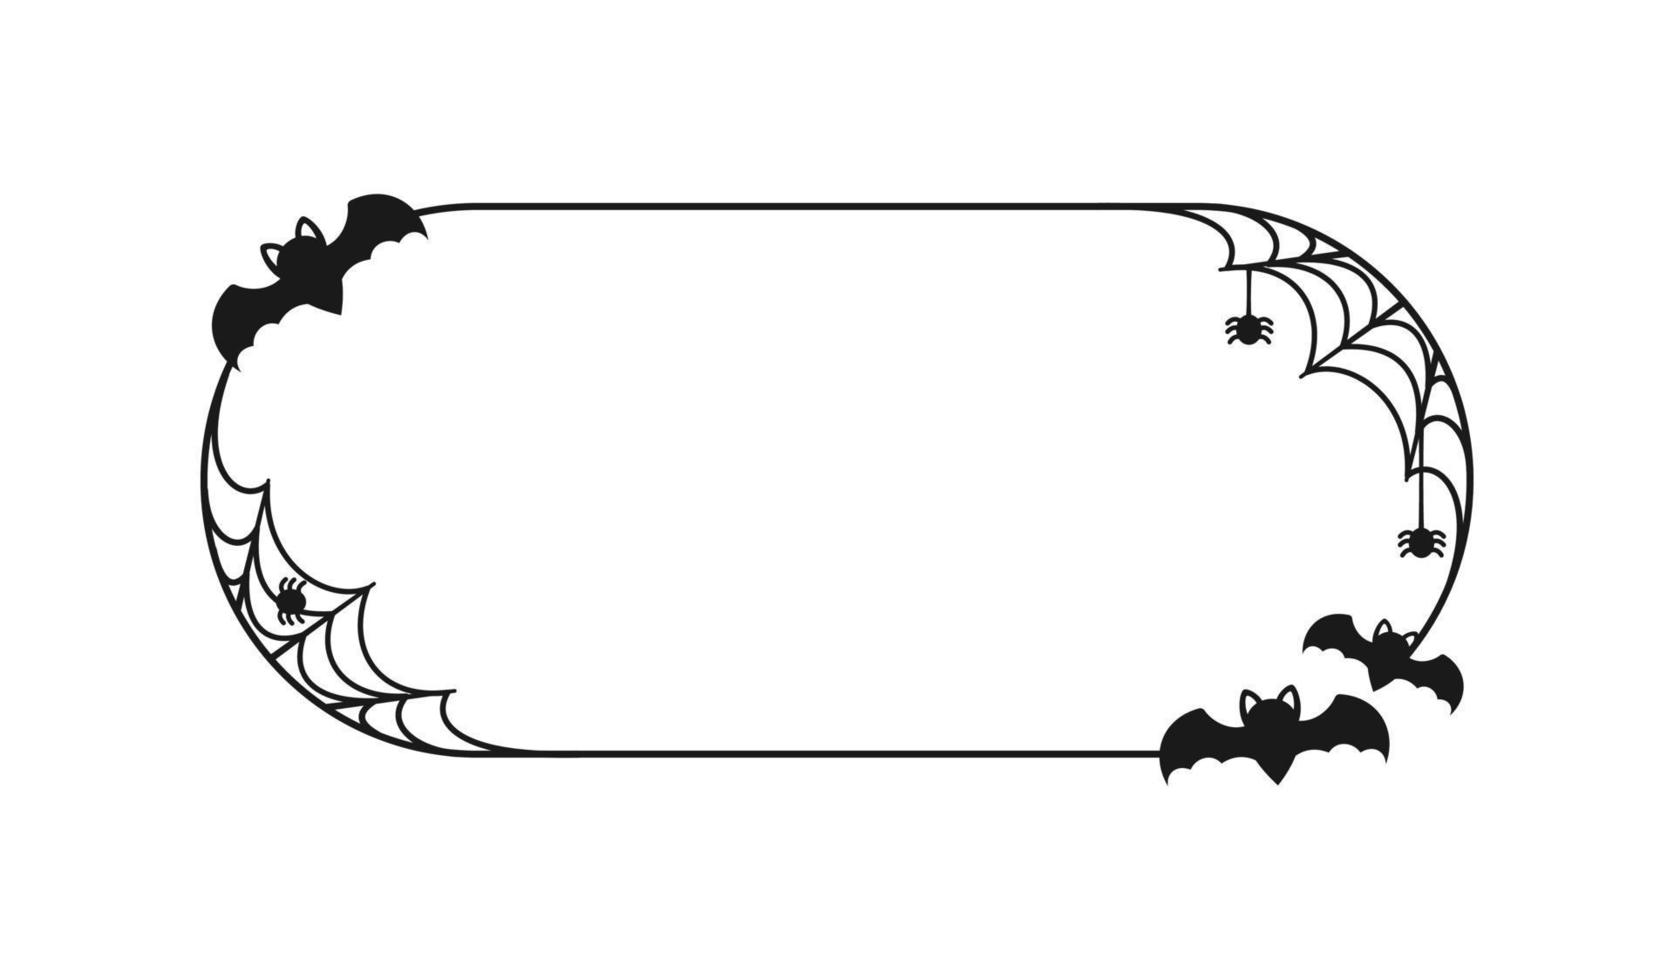 Bat with spiders on web border frame. Halloween theme frames vector